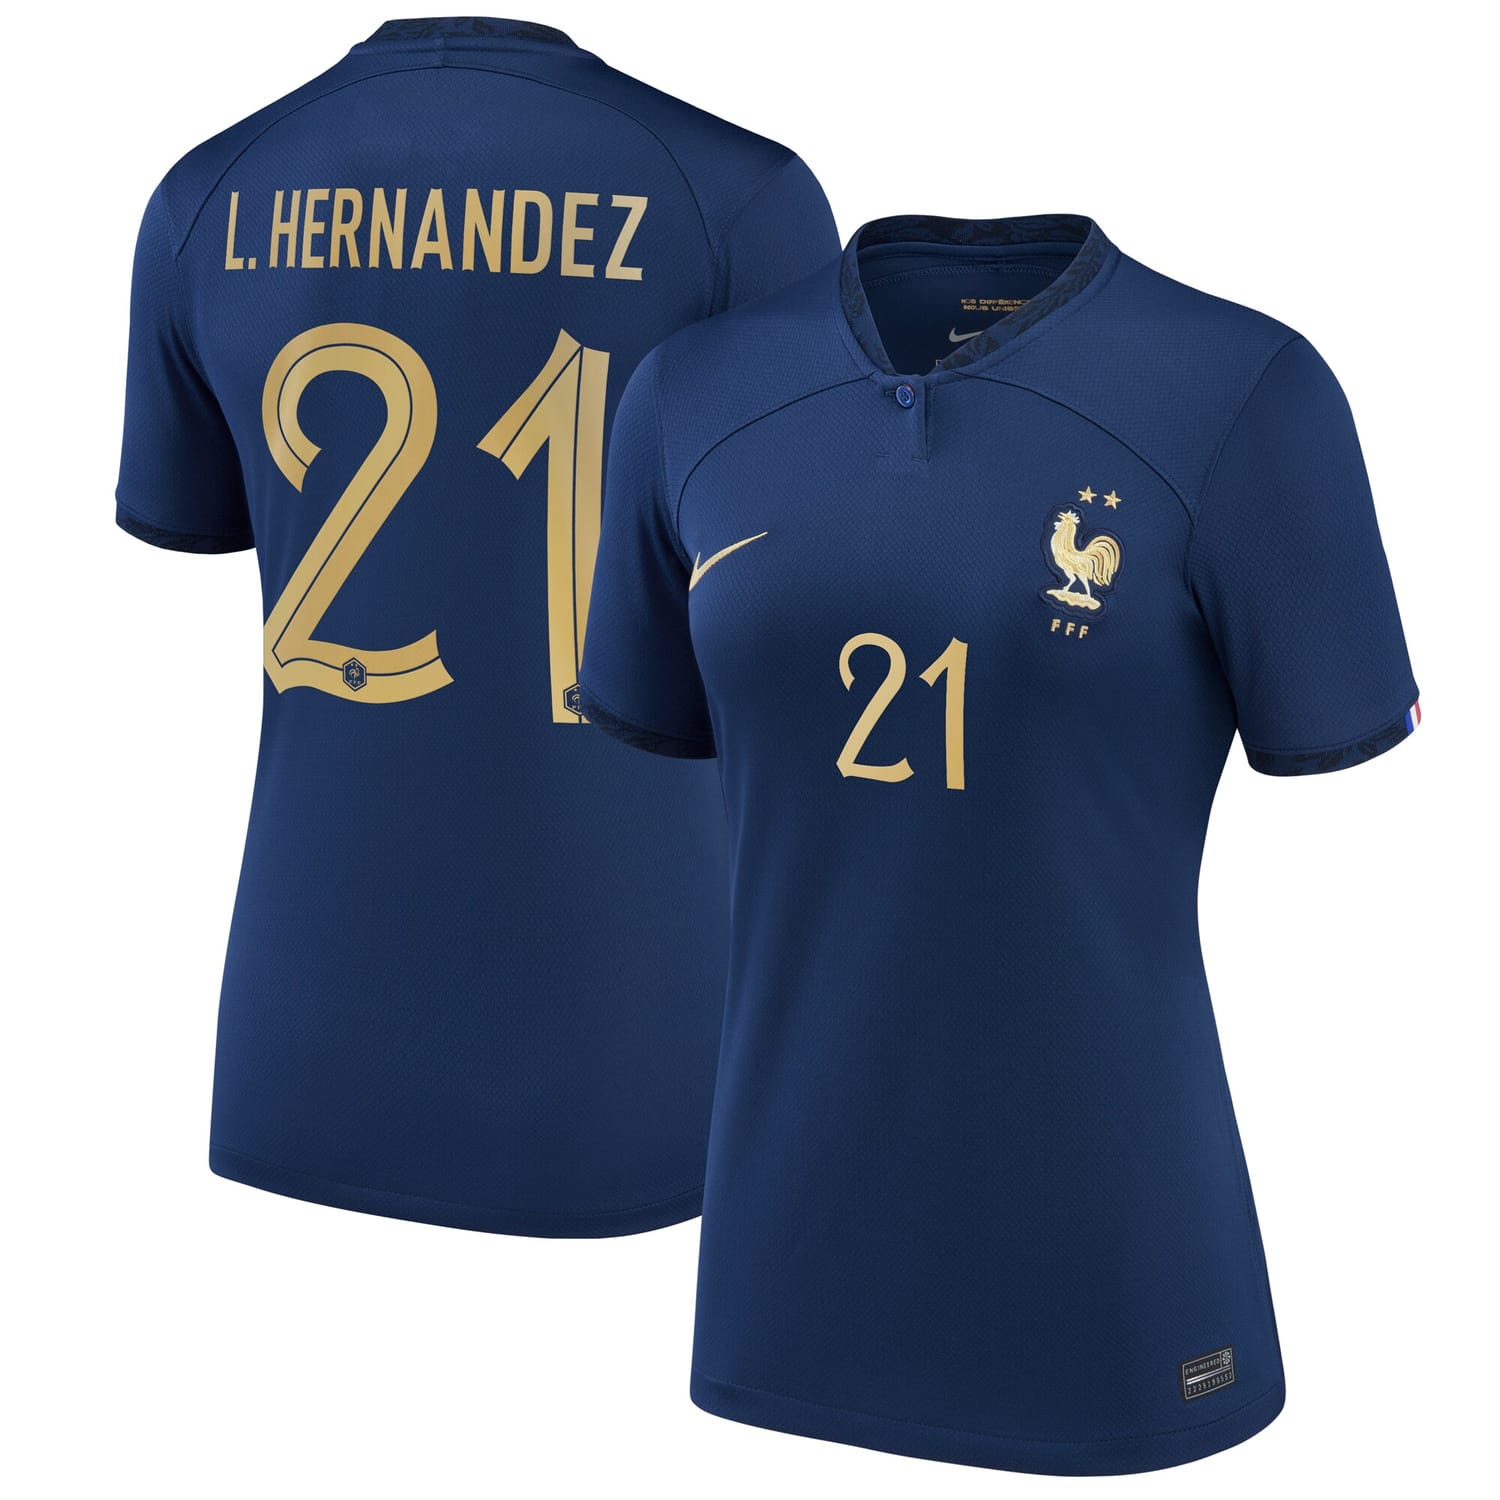 France National Team Home Jersey Shirt 2022 player Lucas Hernandez 21 printing for Women